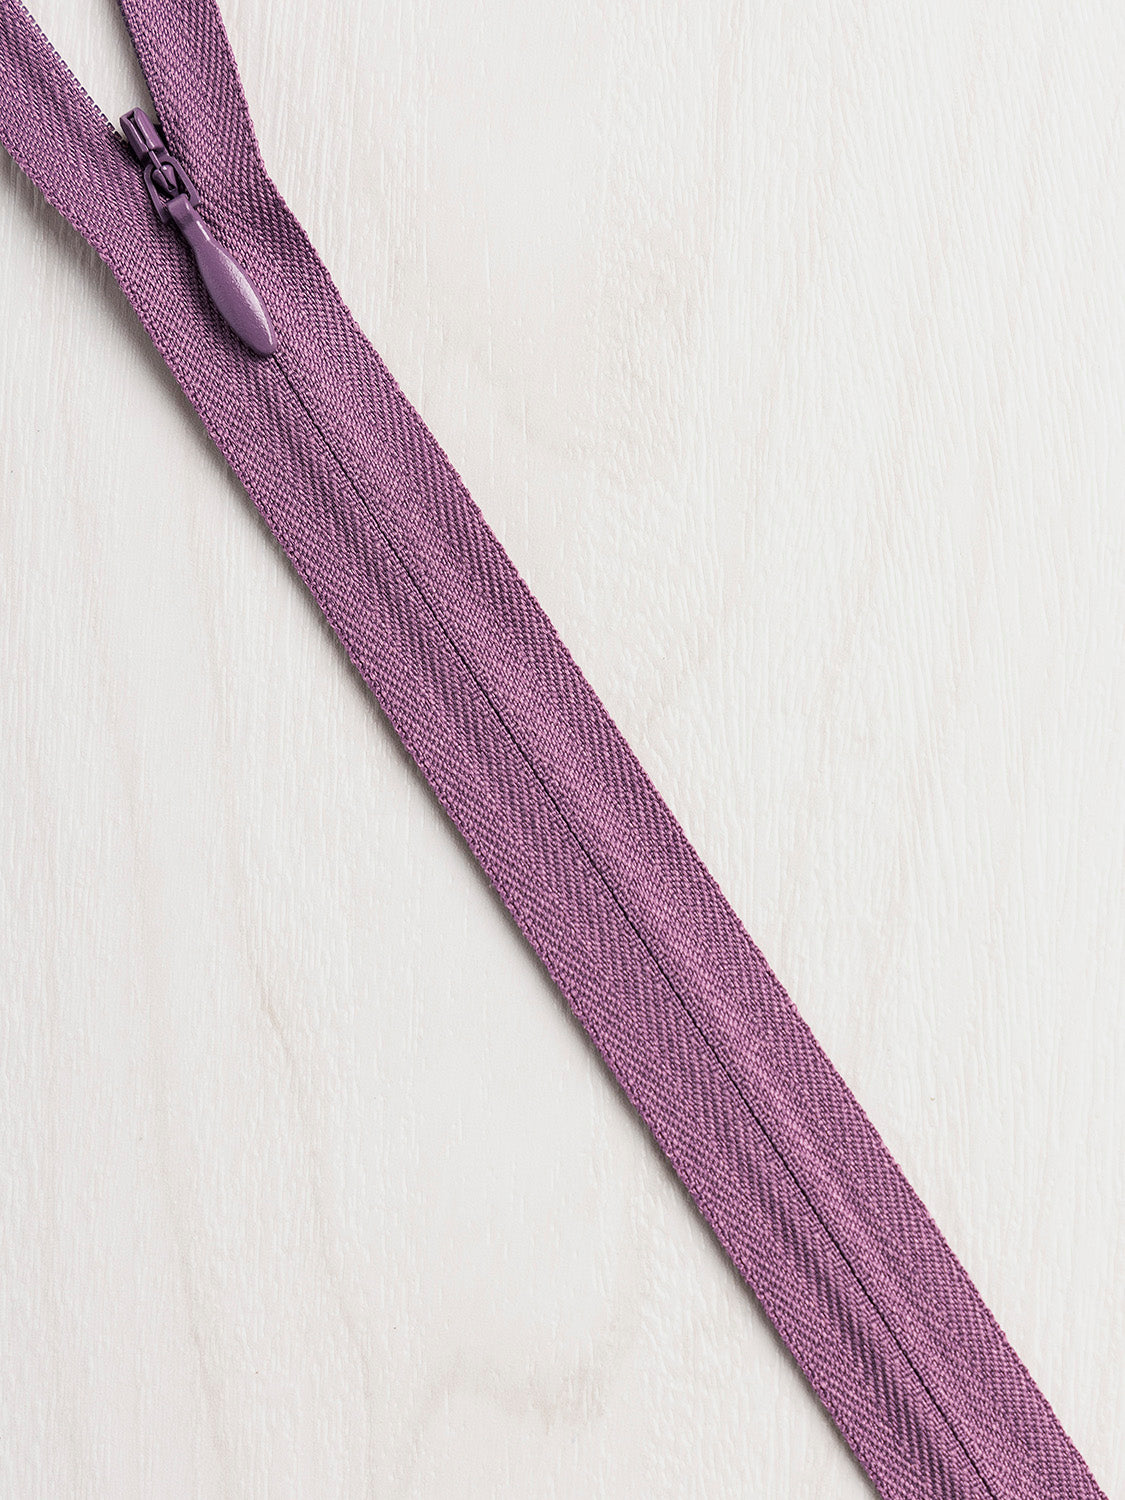 N-ZIP001-291-Invisible_Zipper_Purple-Core_Fabrics-V1.jpg